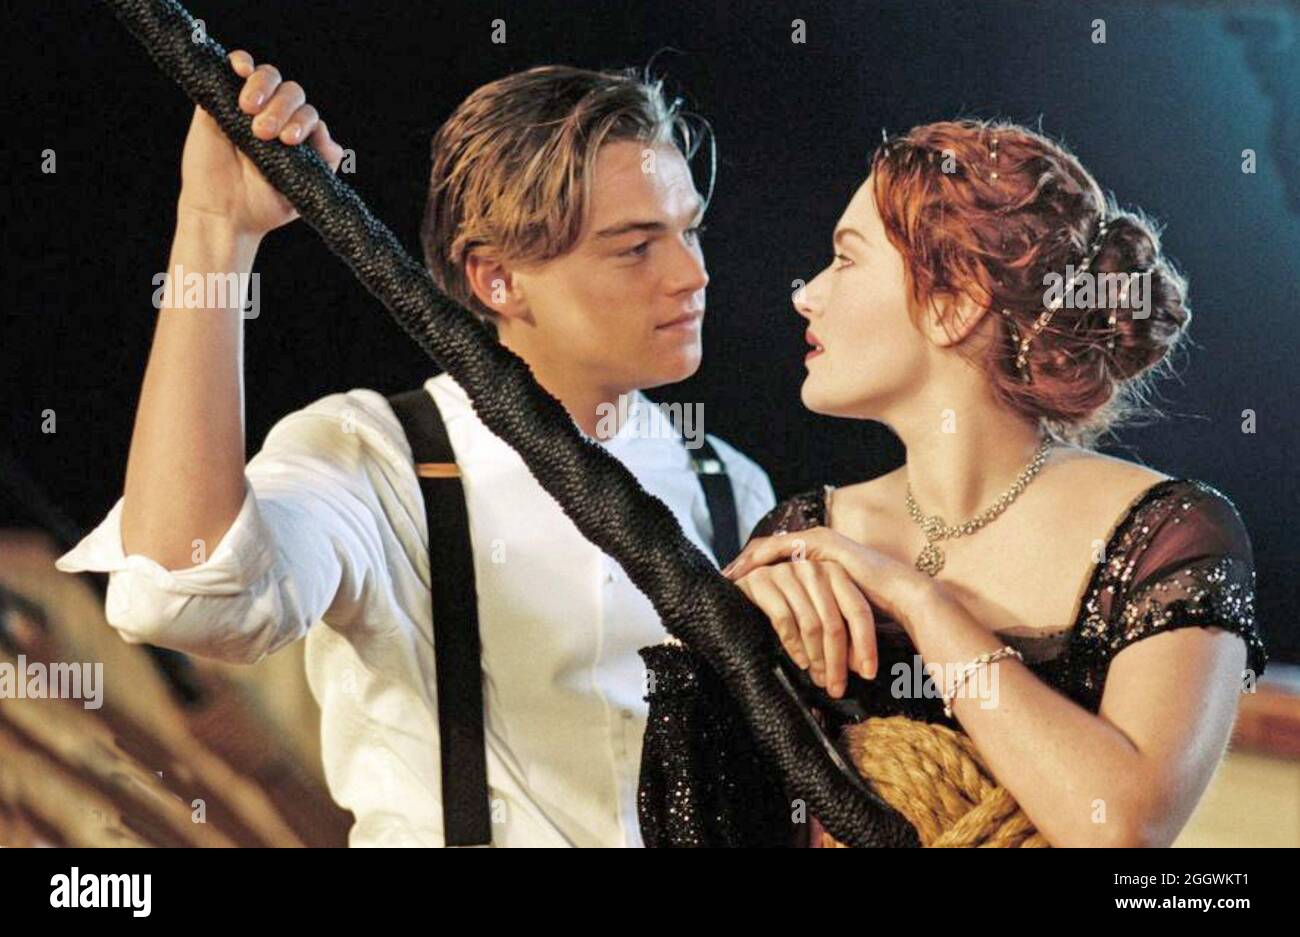 Leonardo dicaprio titanic movie hi-res stock photography and images - Alamy